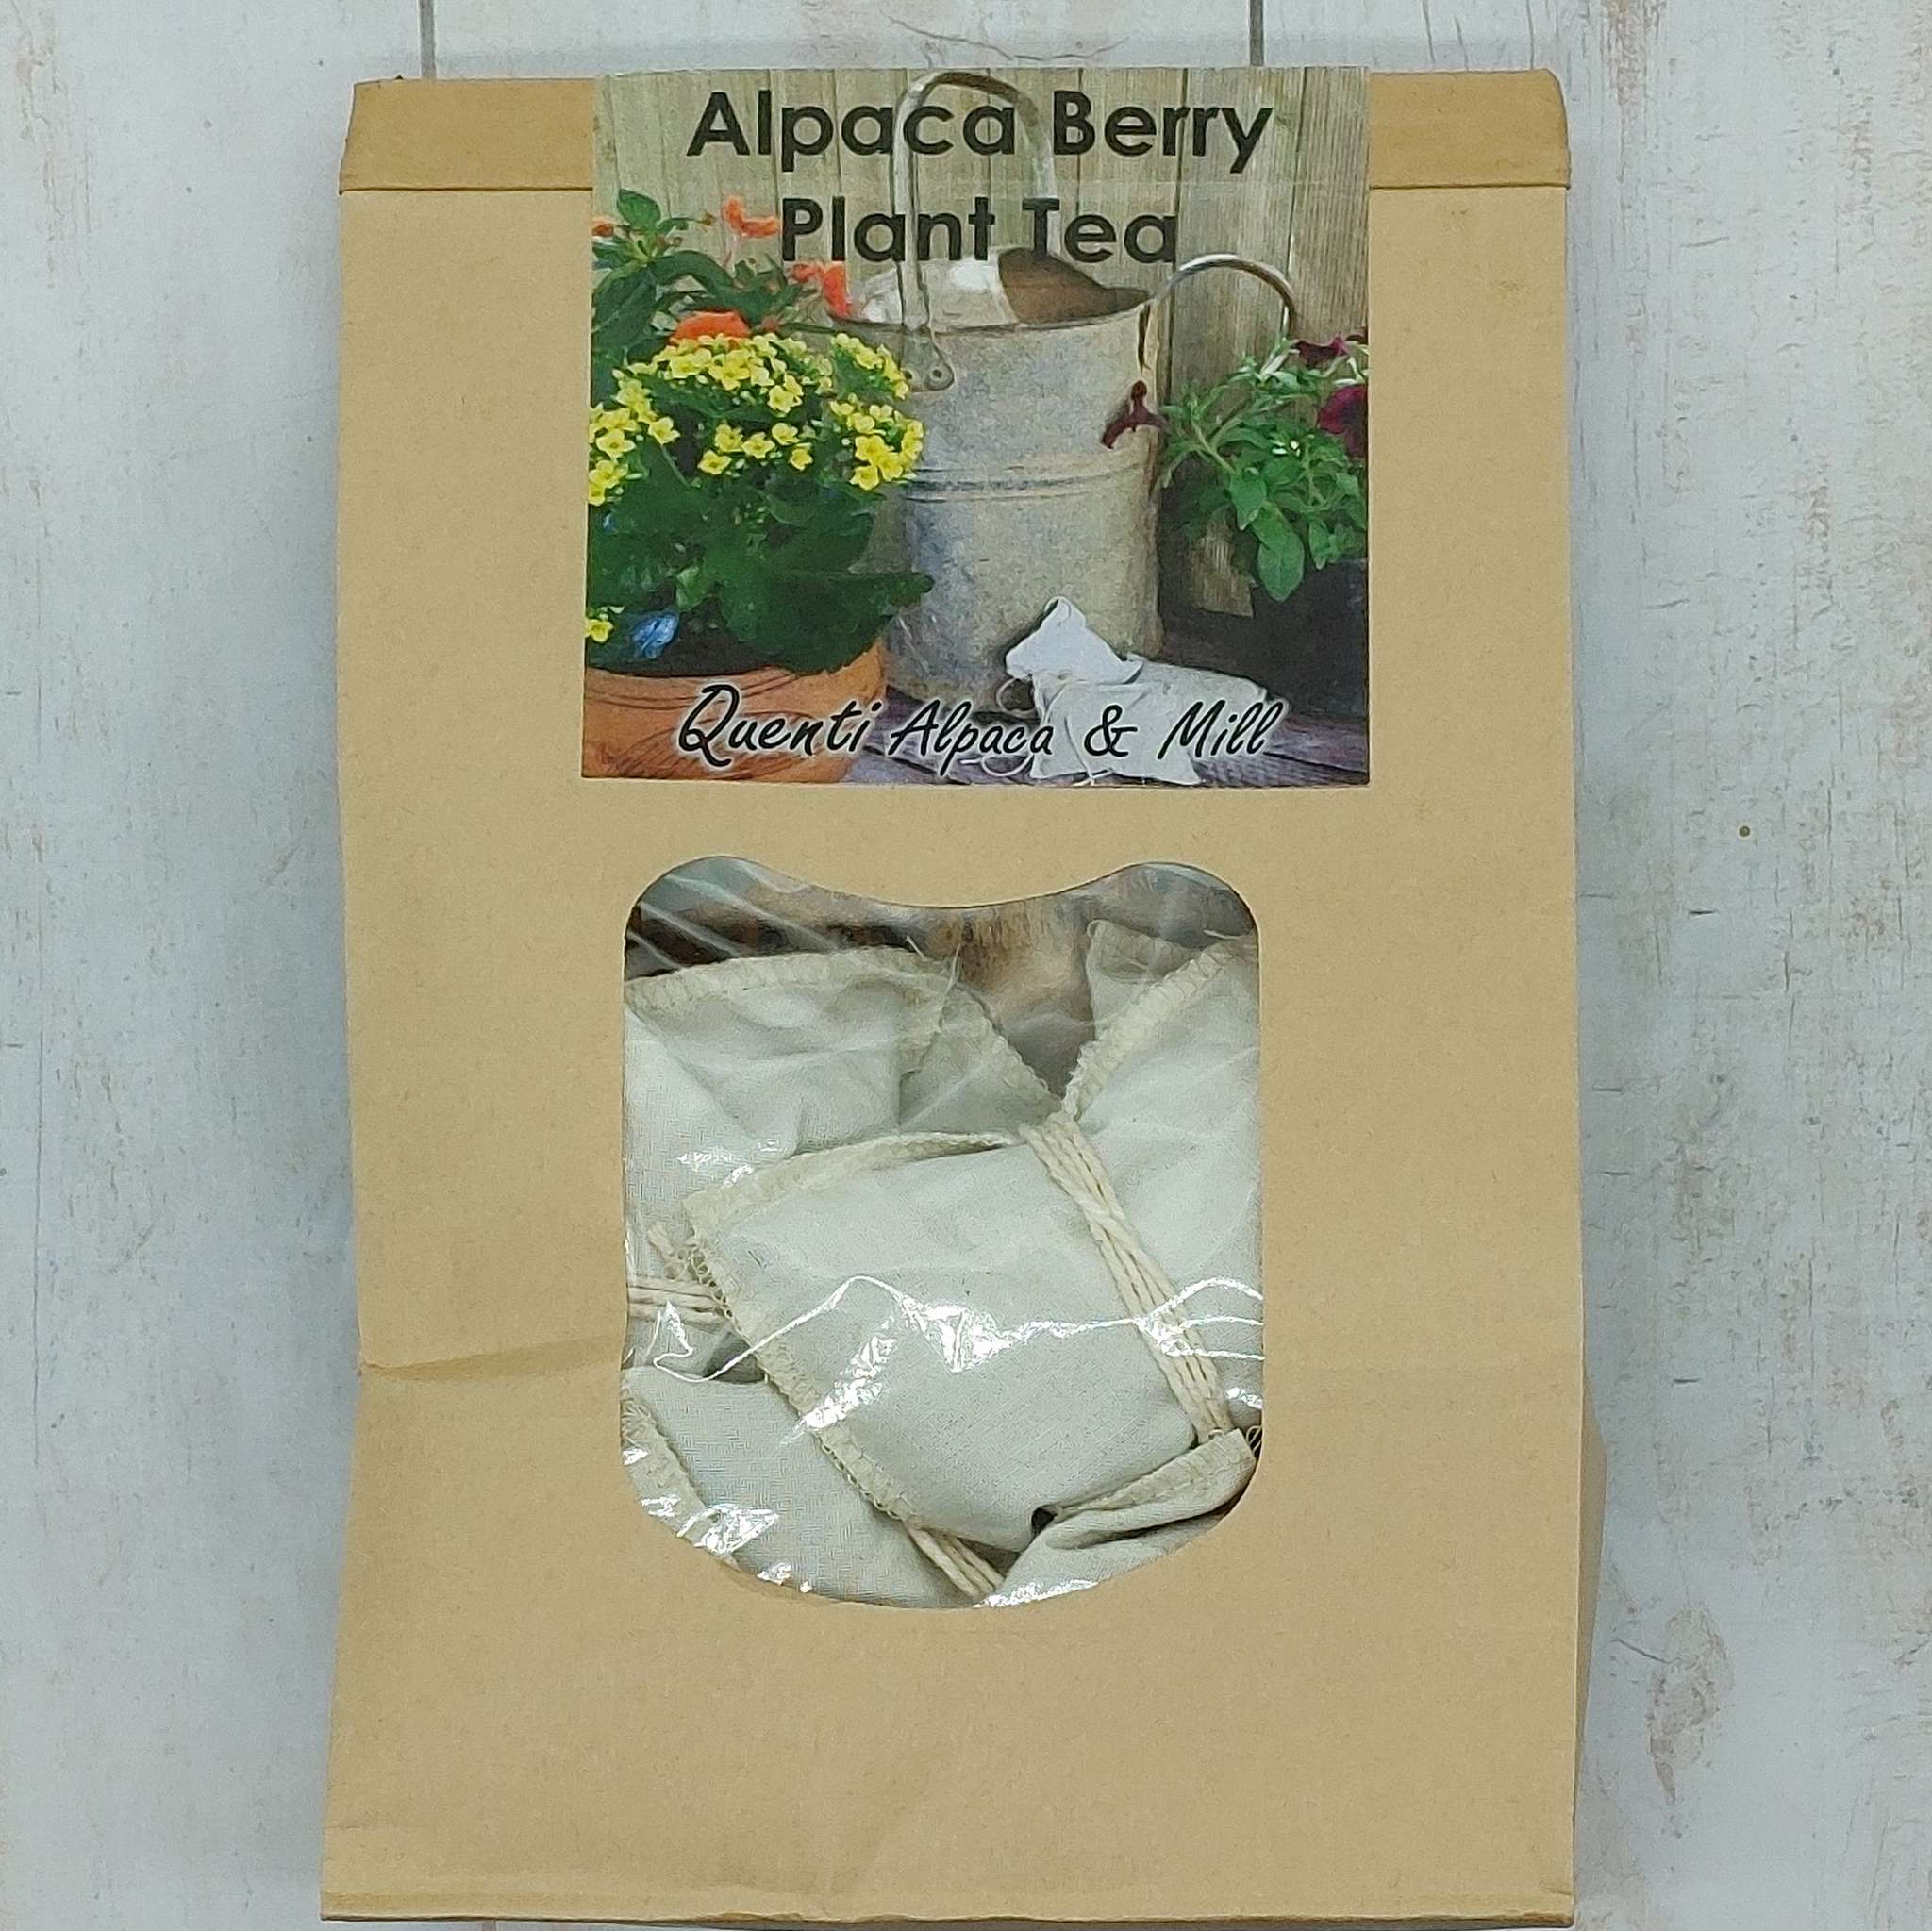 Alpaca Berry Plant Tea